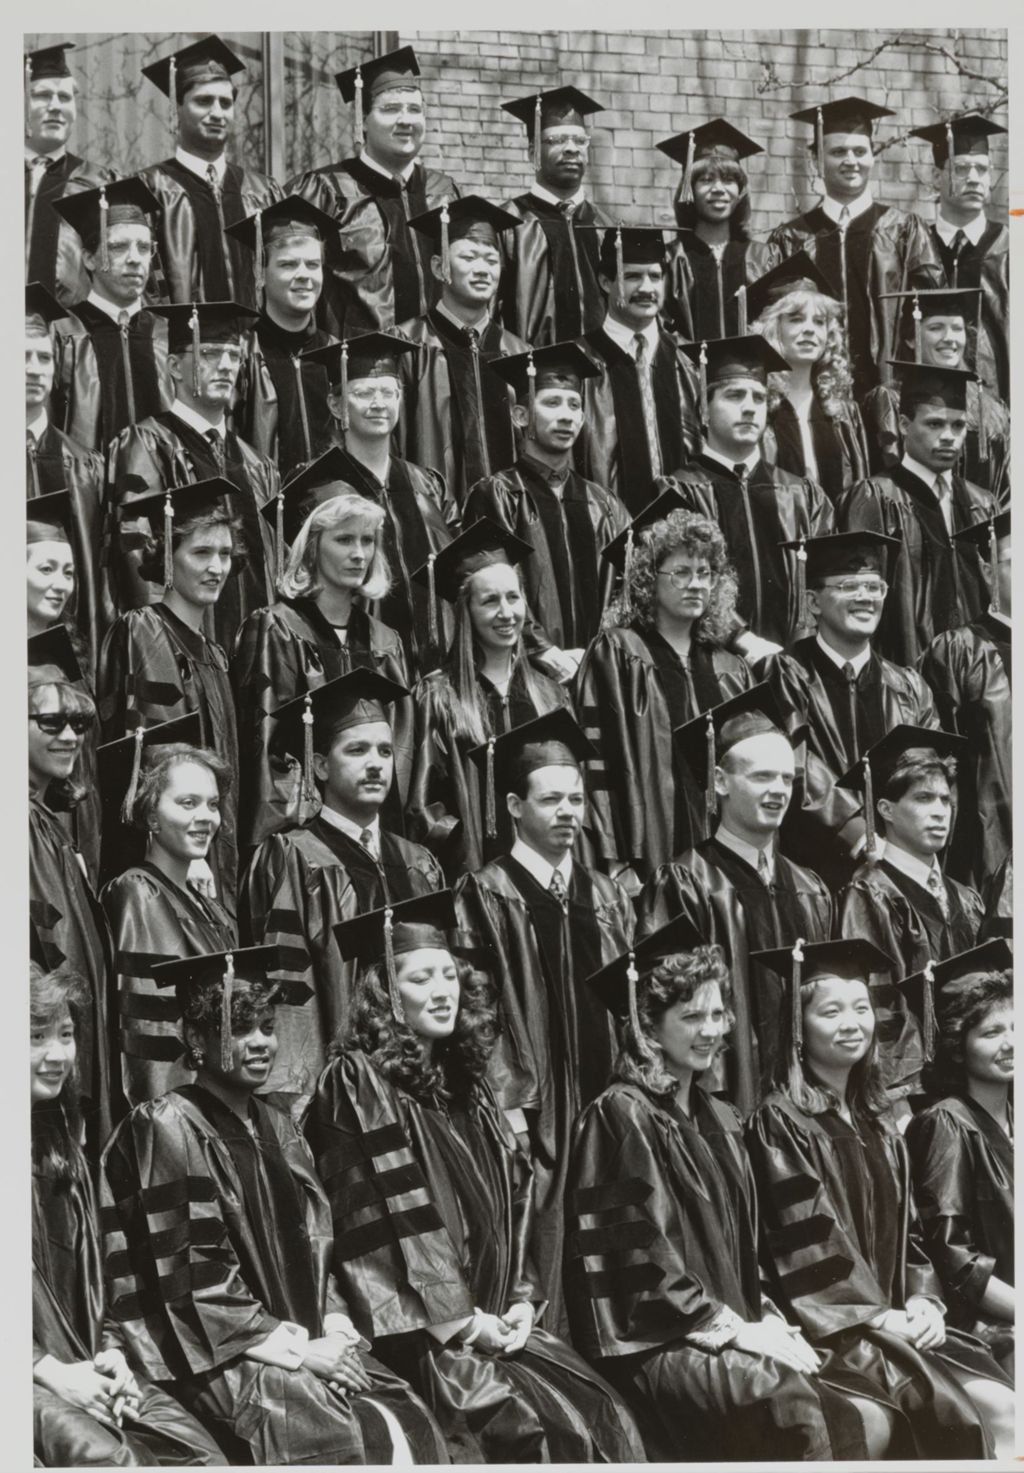 Group portrait of the graduating class